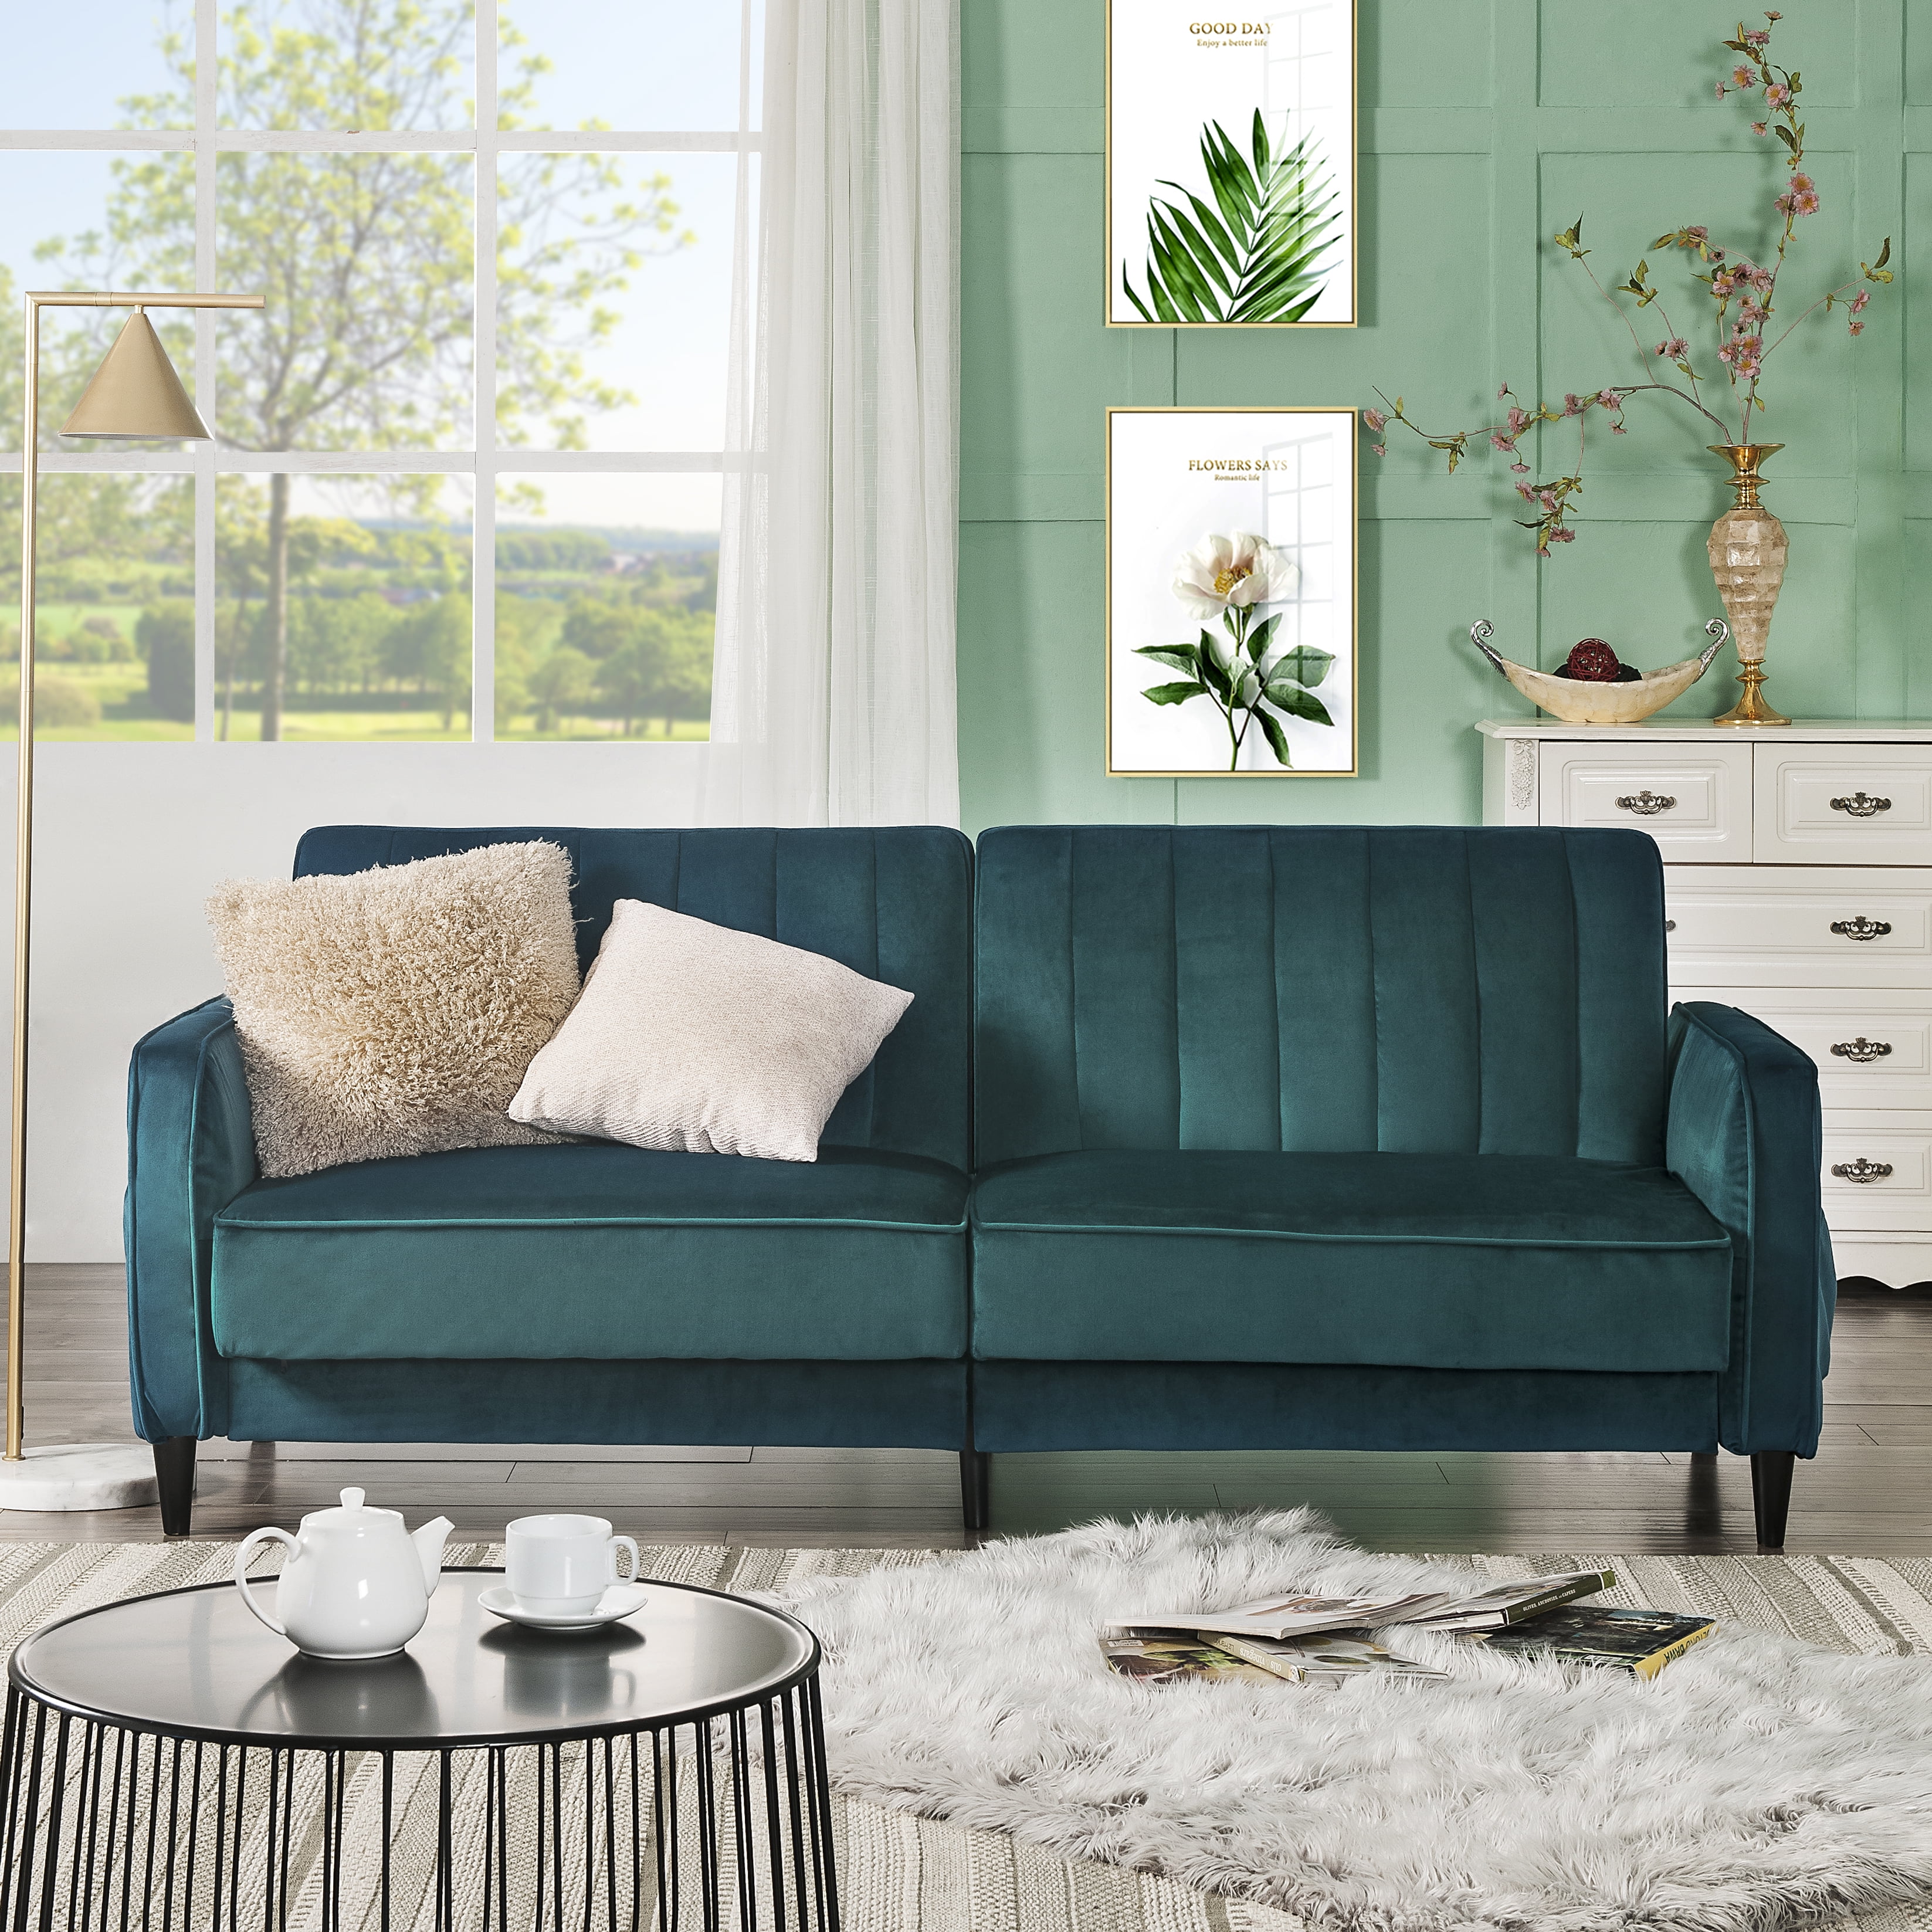 Merax Premium Sofa Bed in Velvet, Green - Walmart.com